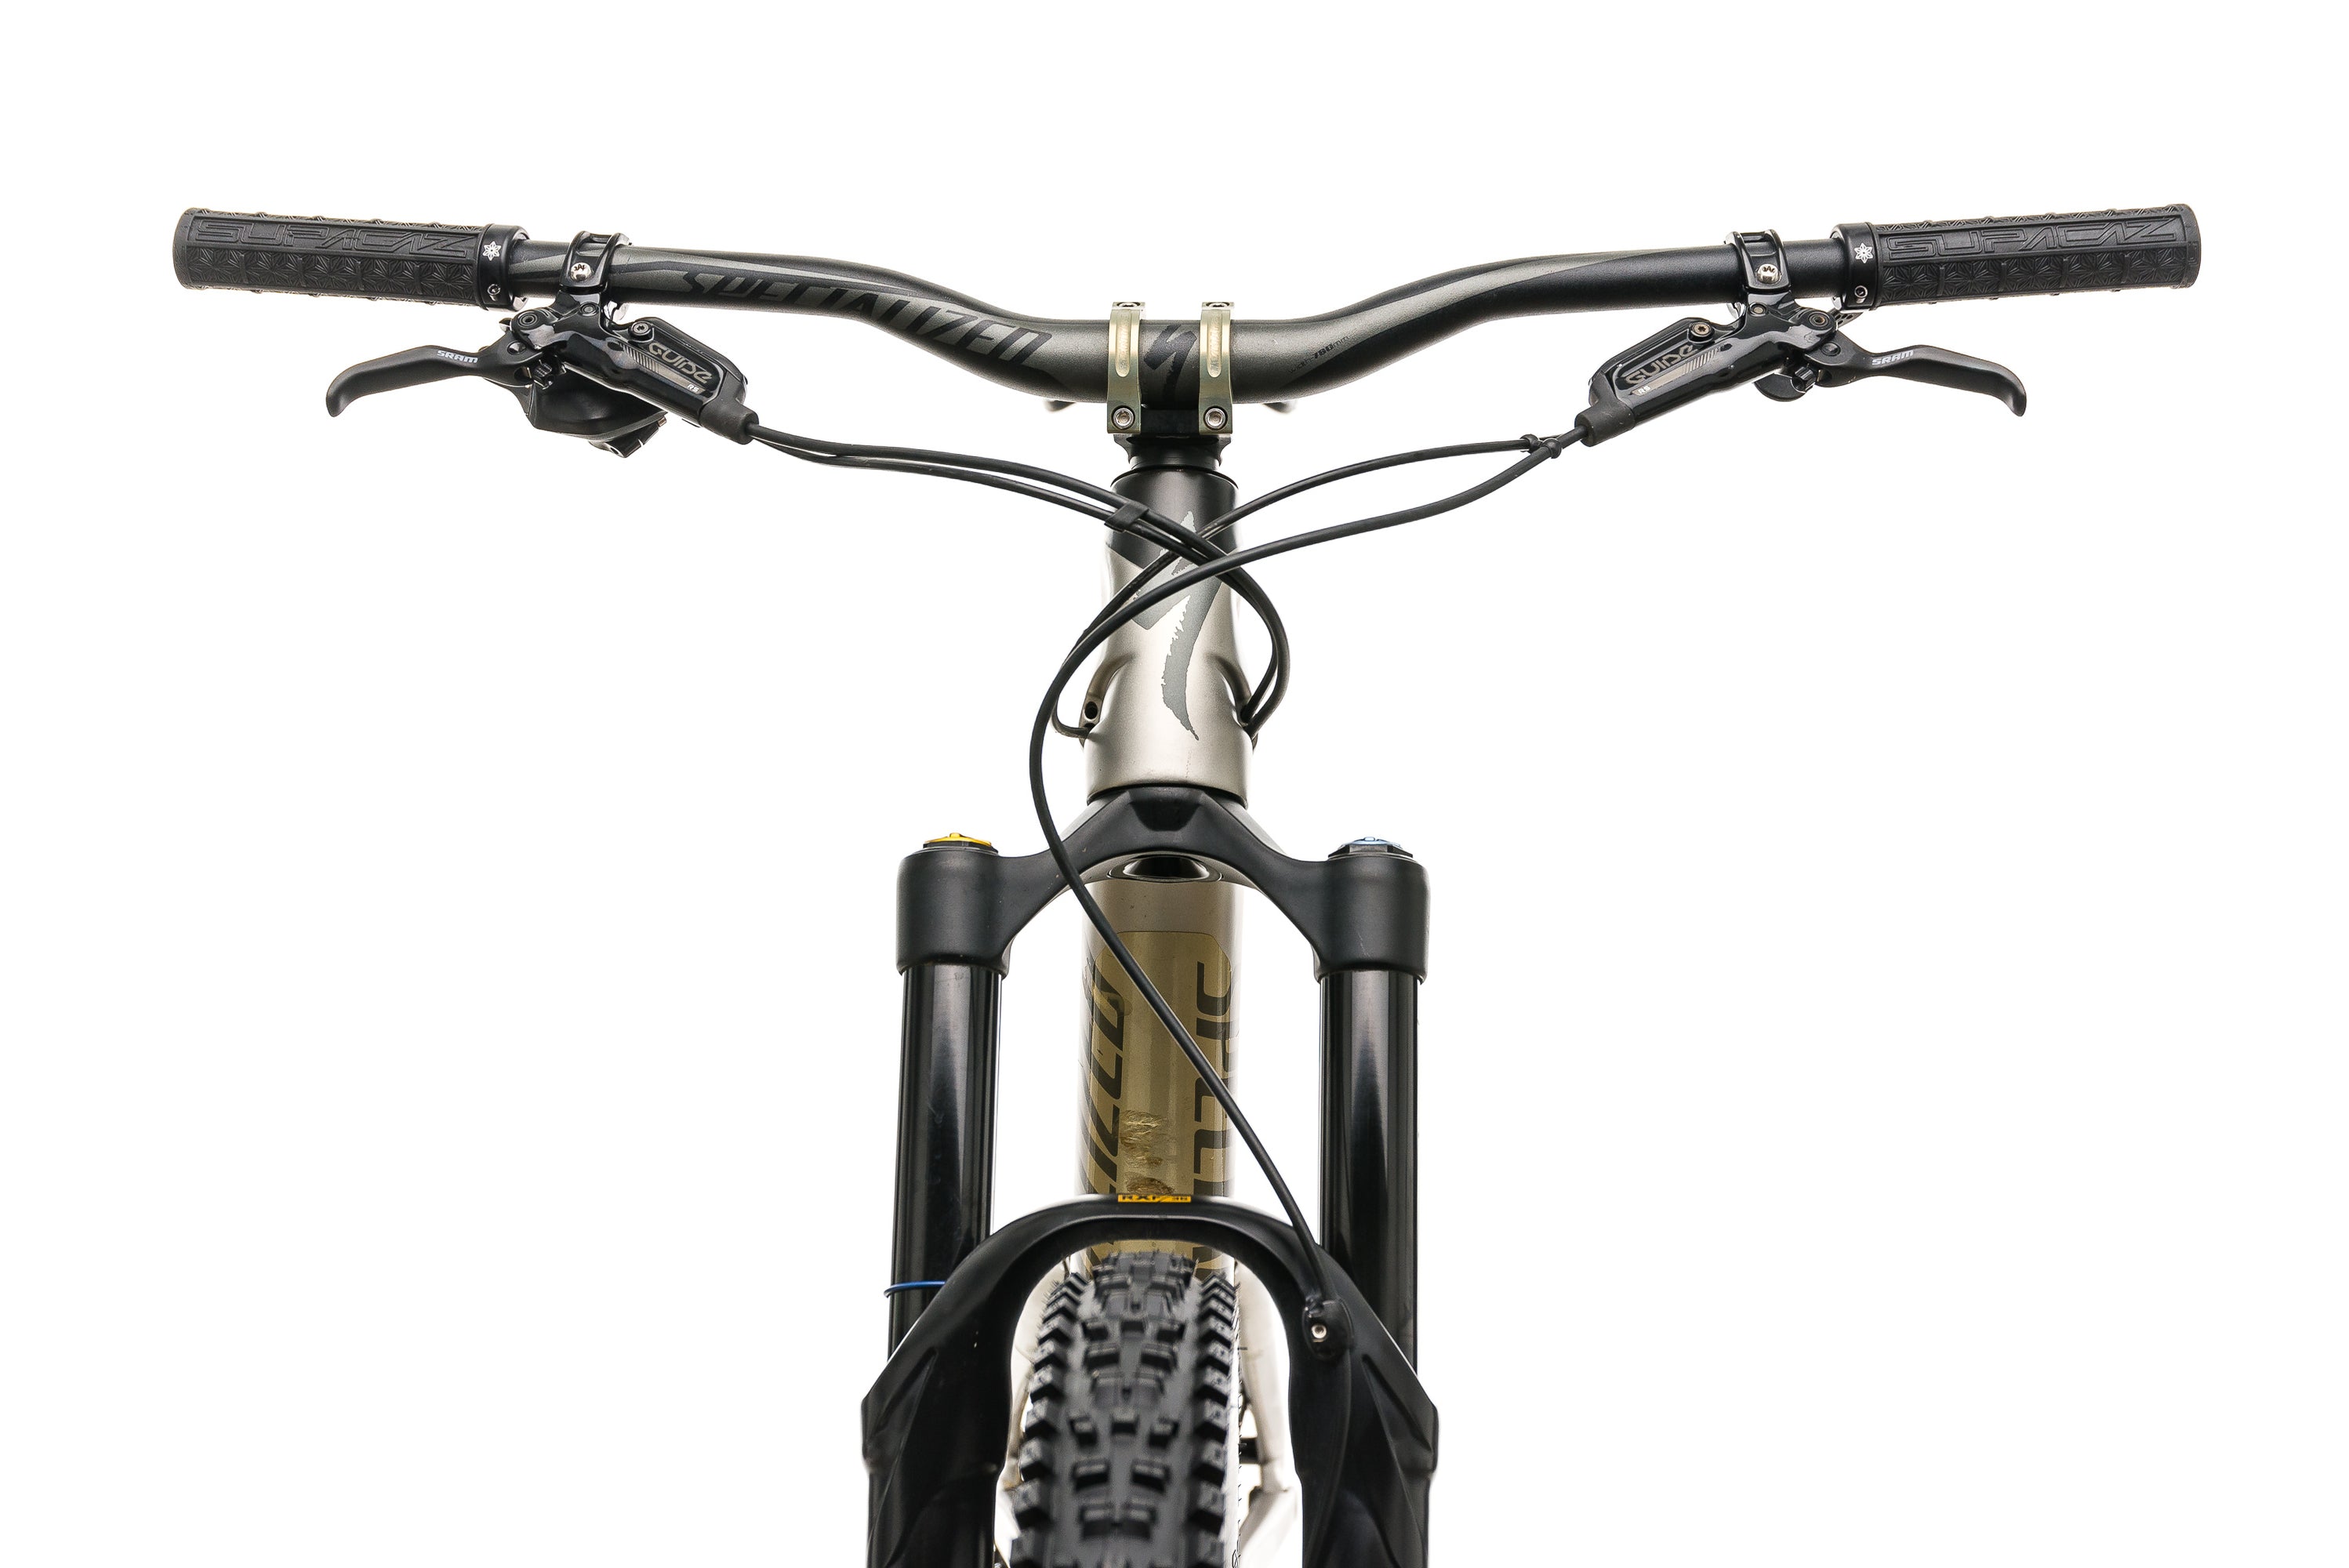 Specialized Stumpjumper Pro Carbon 29 Mountain Bike - 2018, Large crank